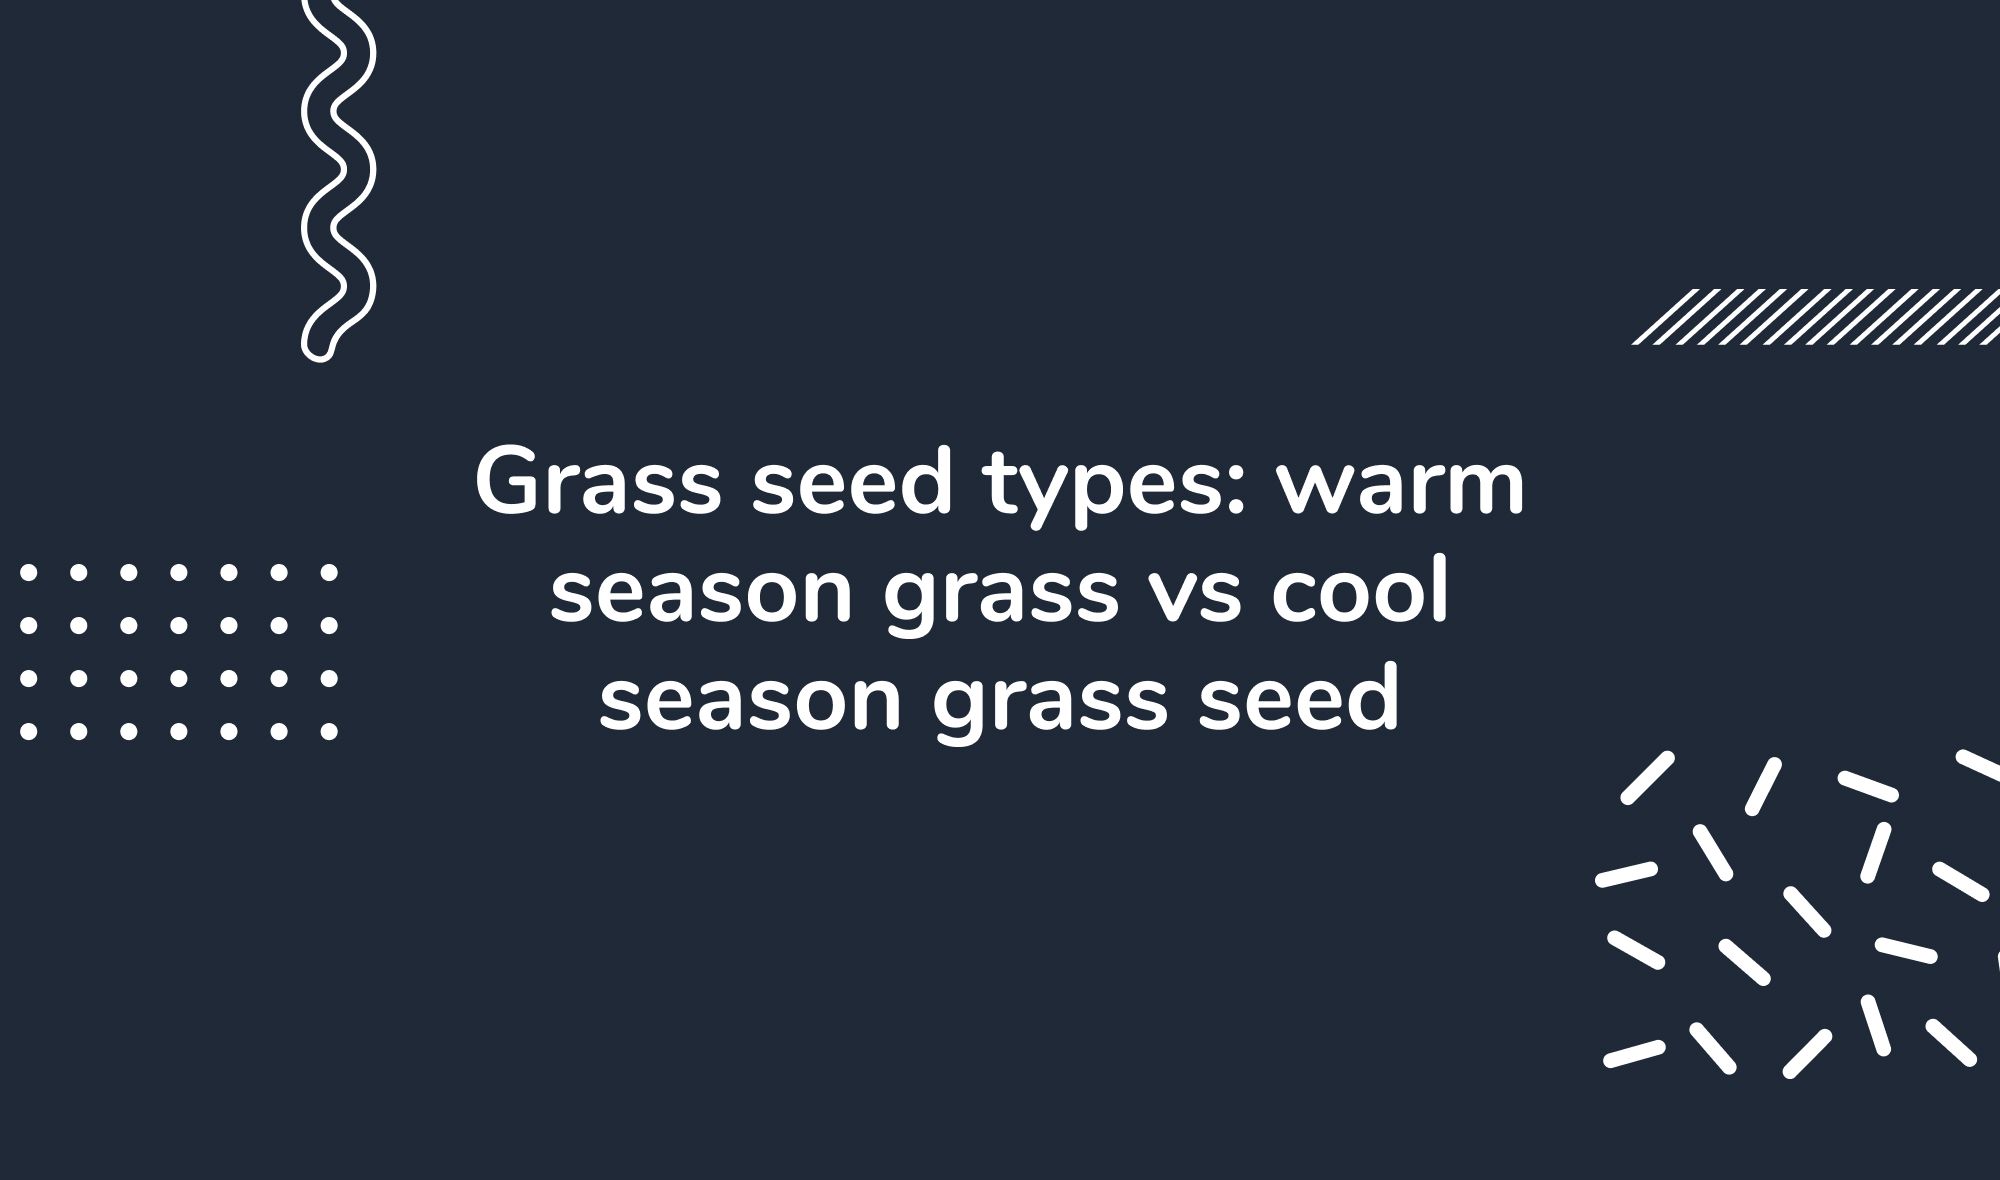 Grass seed types: warm season grass vs cool season grass seed